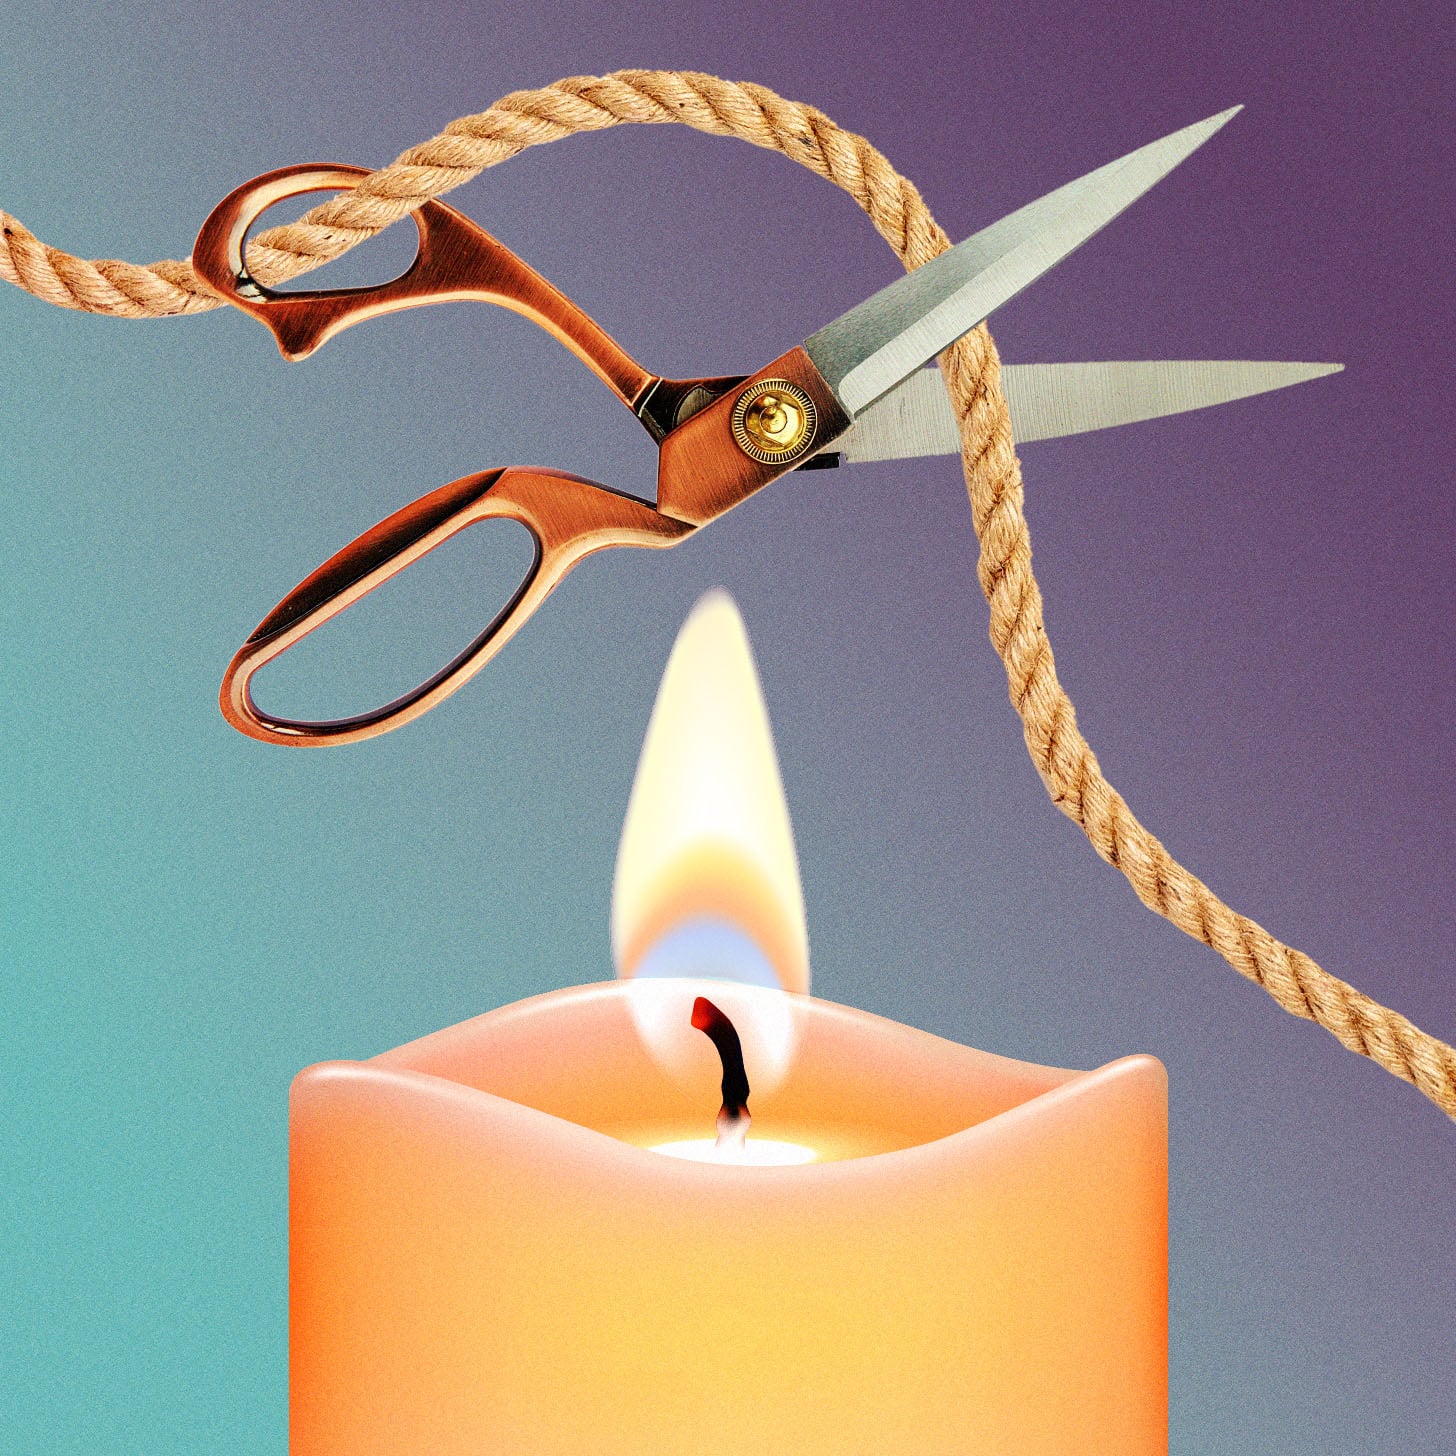 How to Do a Cord Cutting Ritual